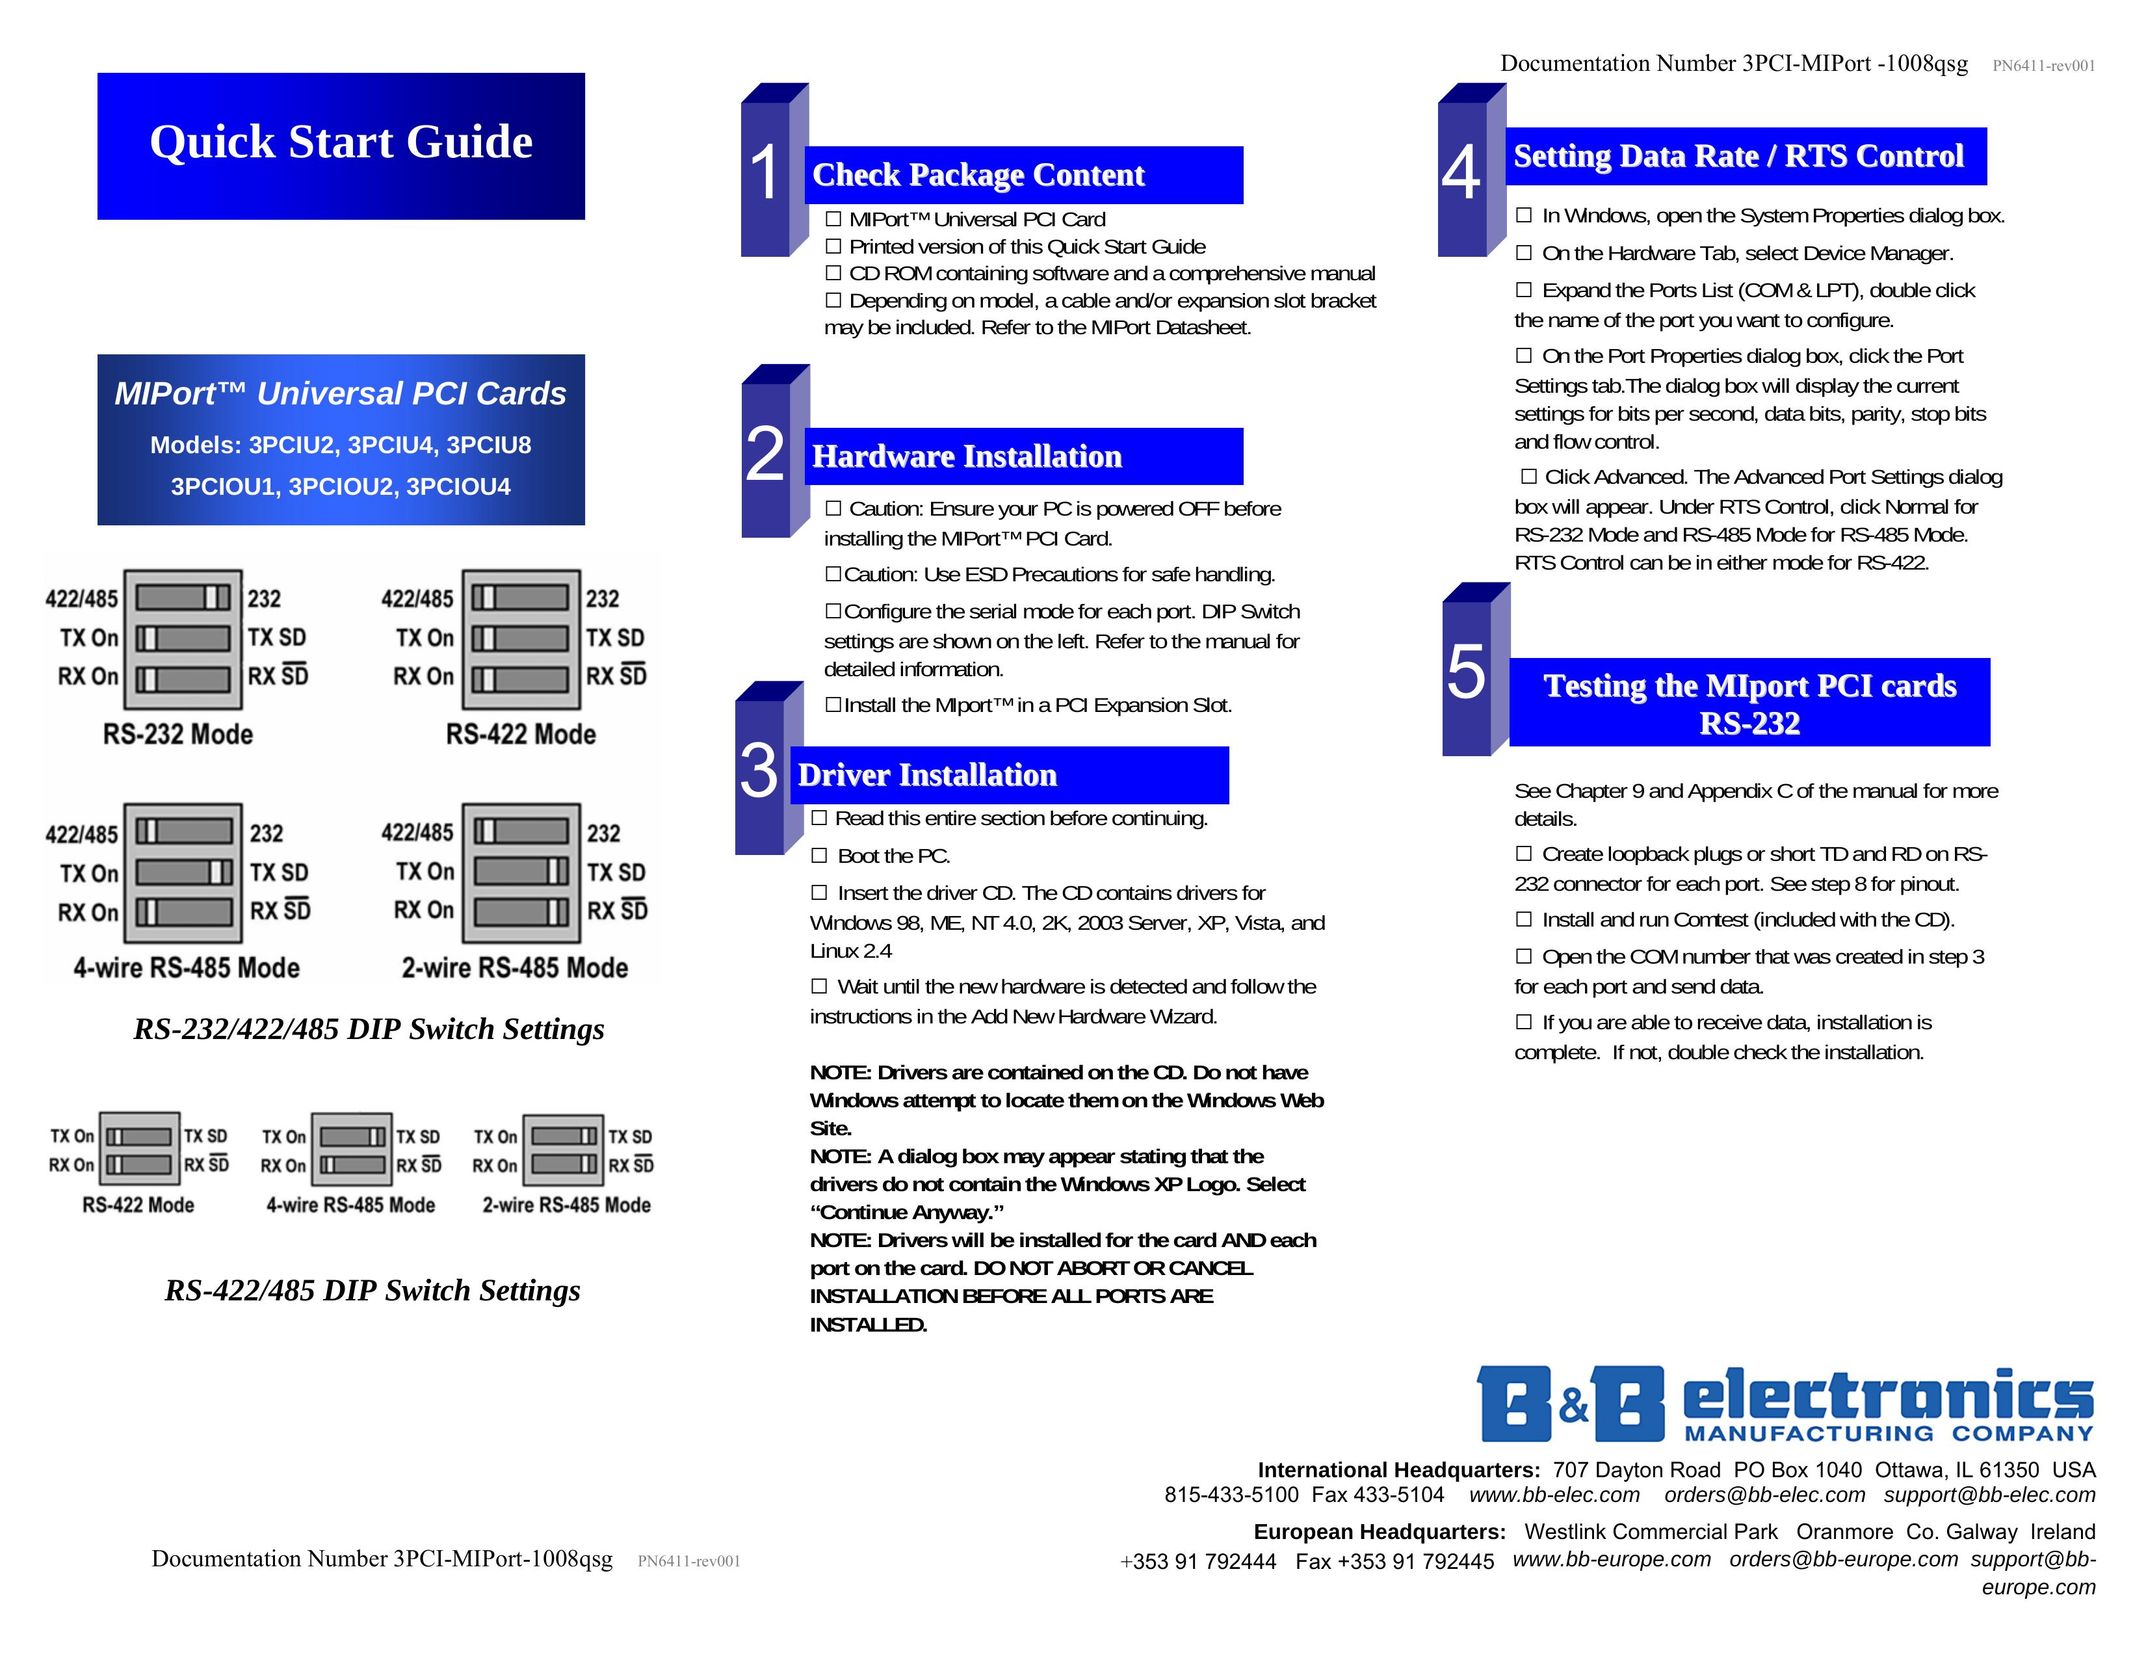 B&B Electronics 3PCIU4 Network Card User Manual